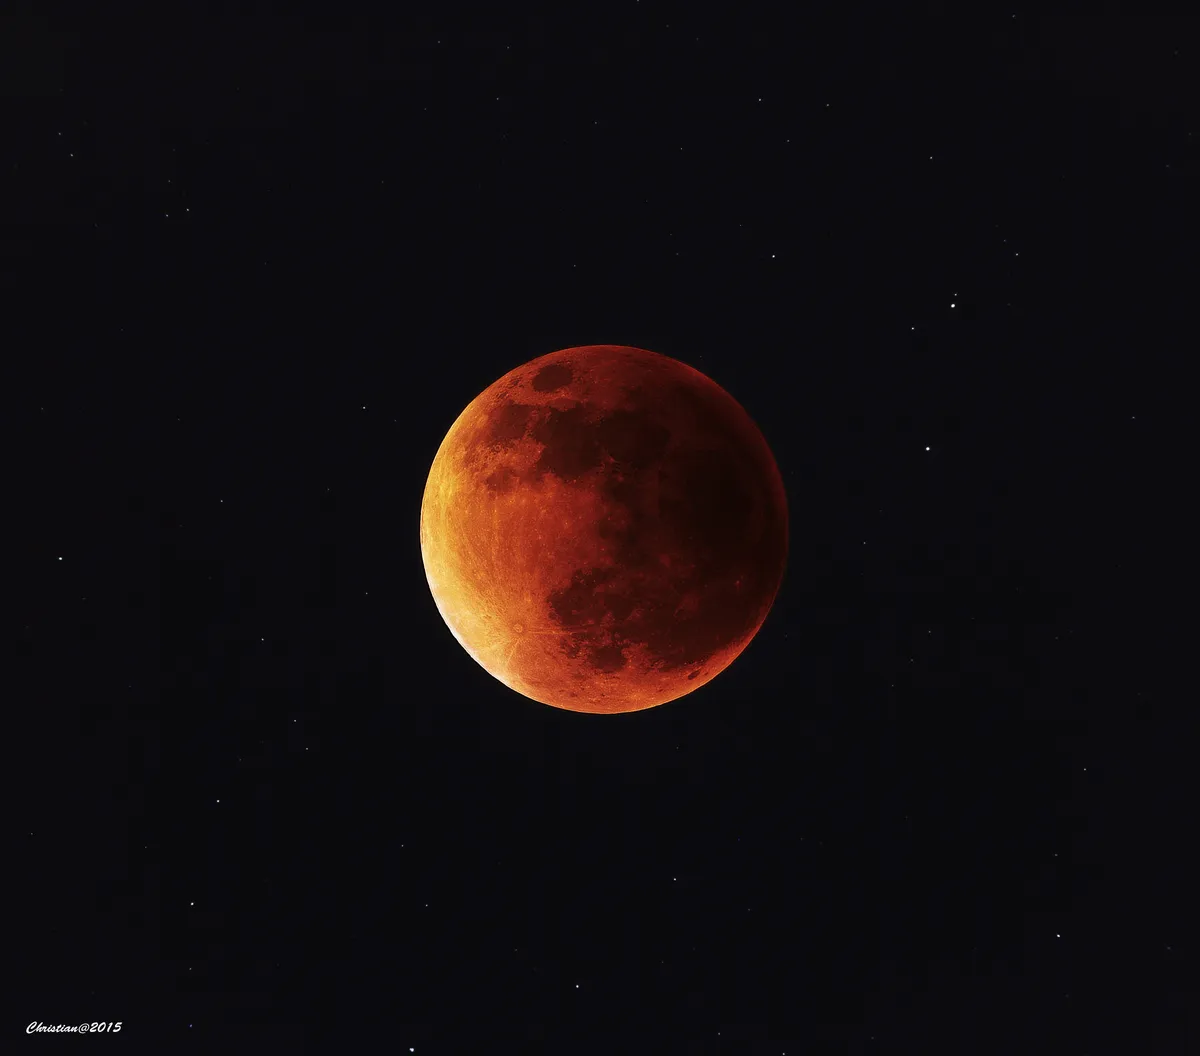 Lunar Eclipse (28/09/2015) by Christian Garcia, Daganzo, Spain.